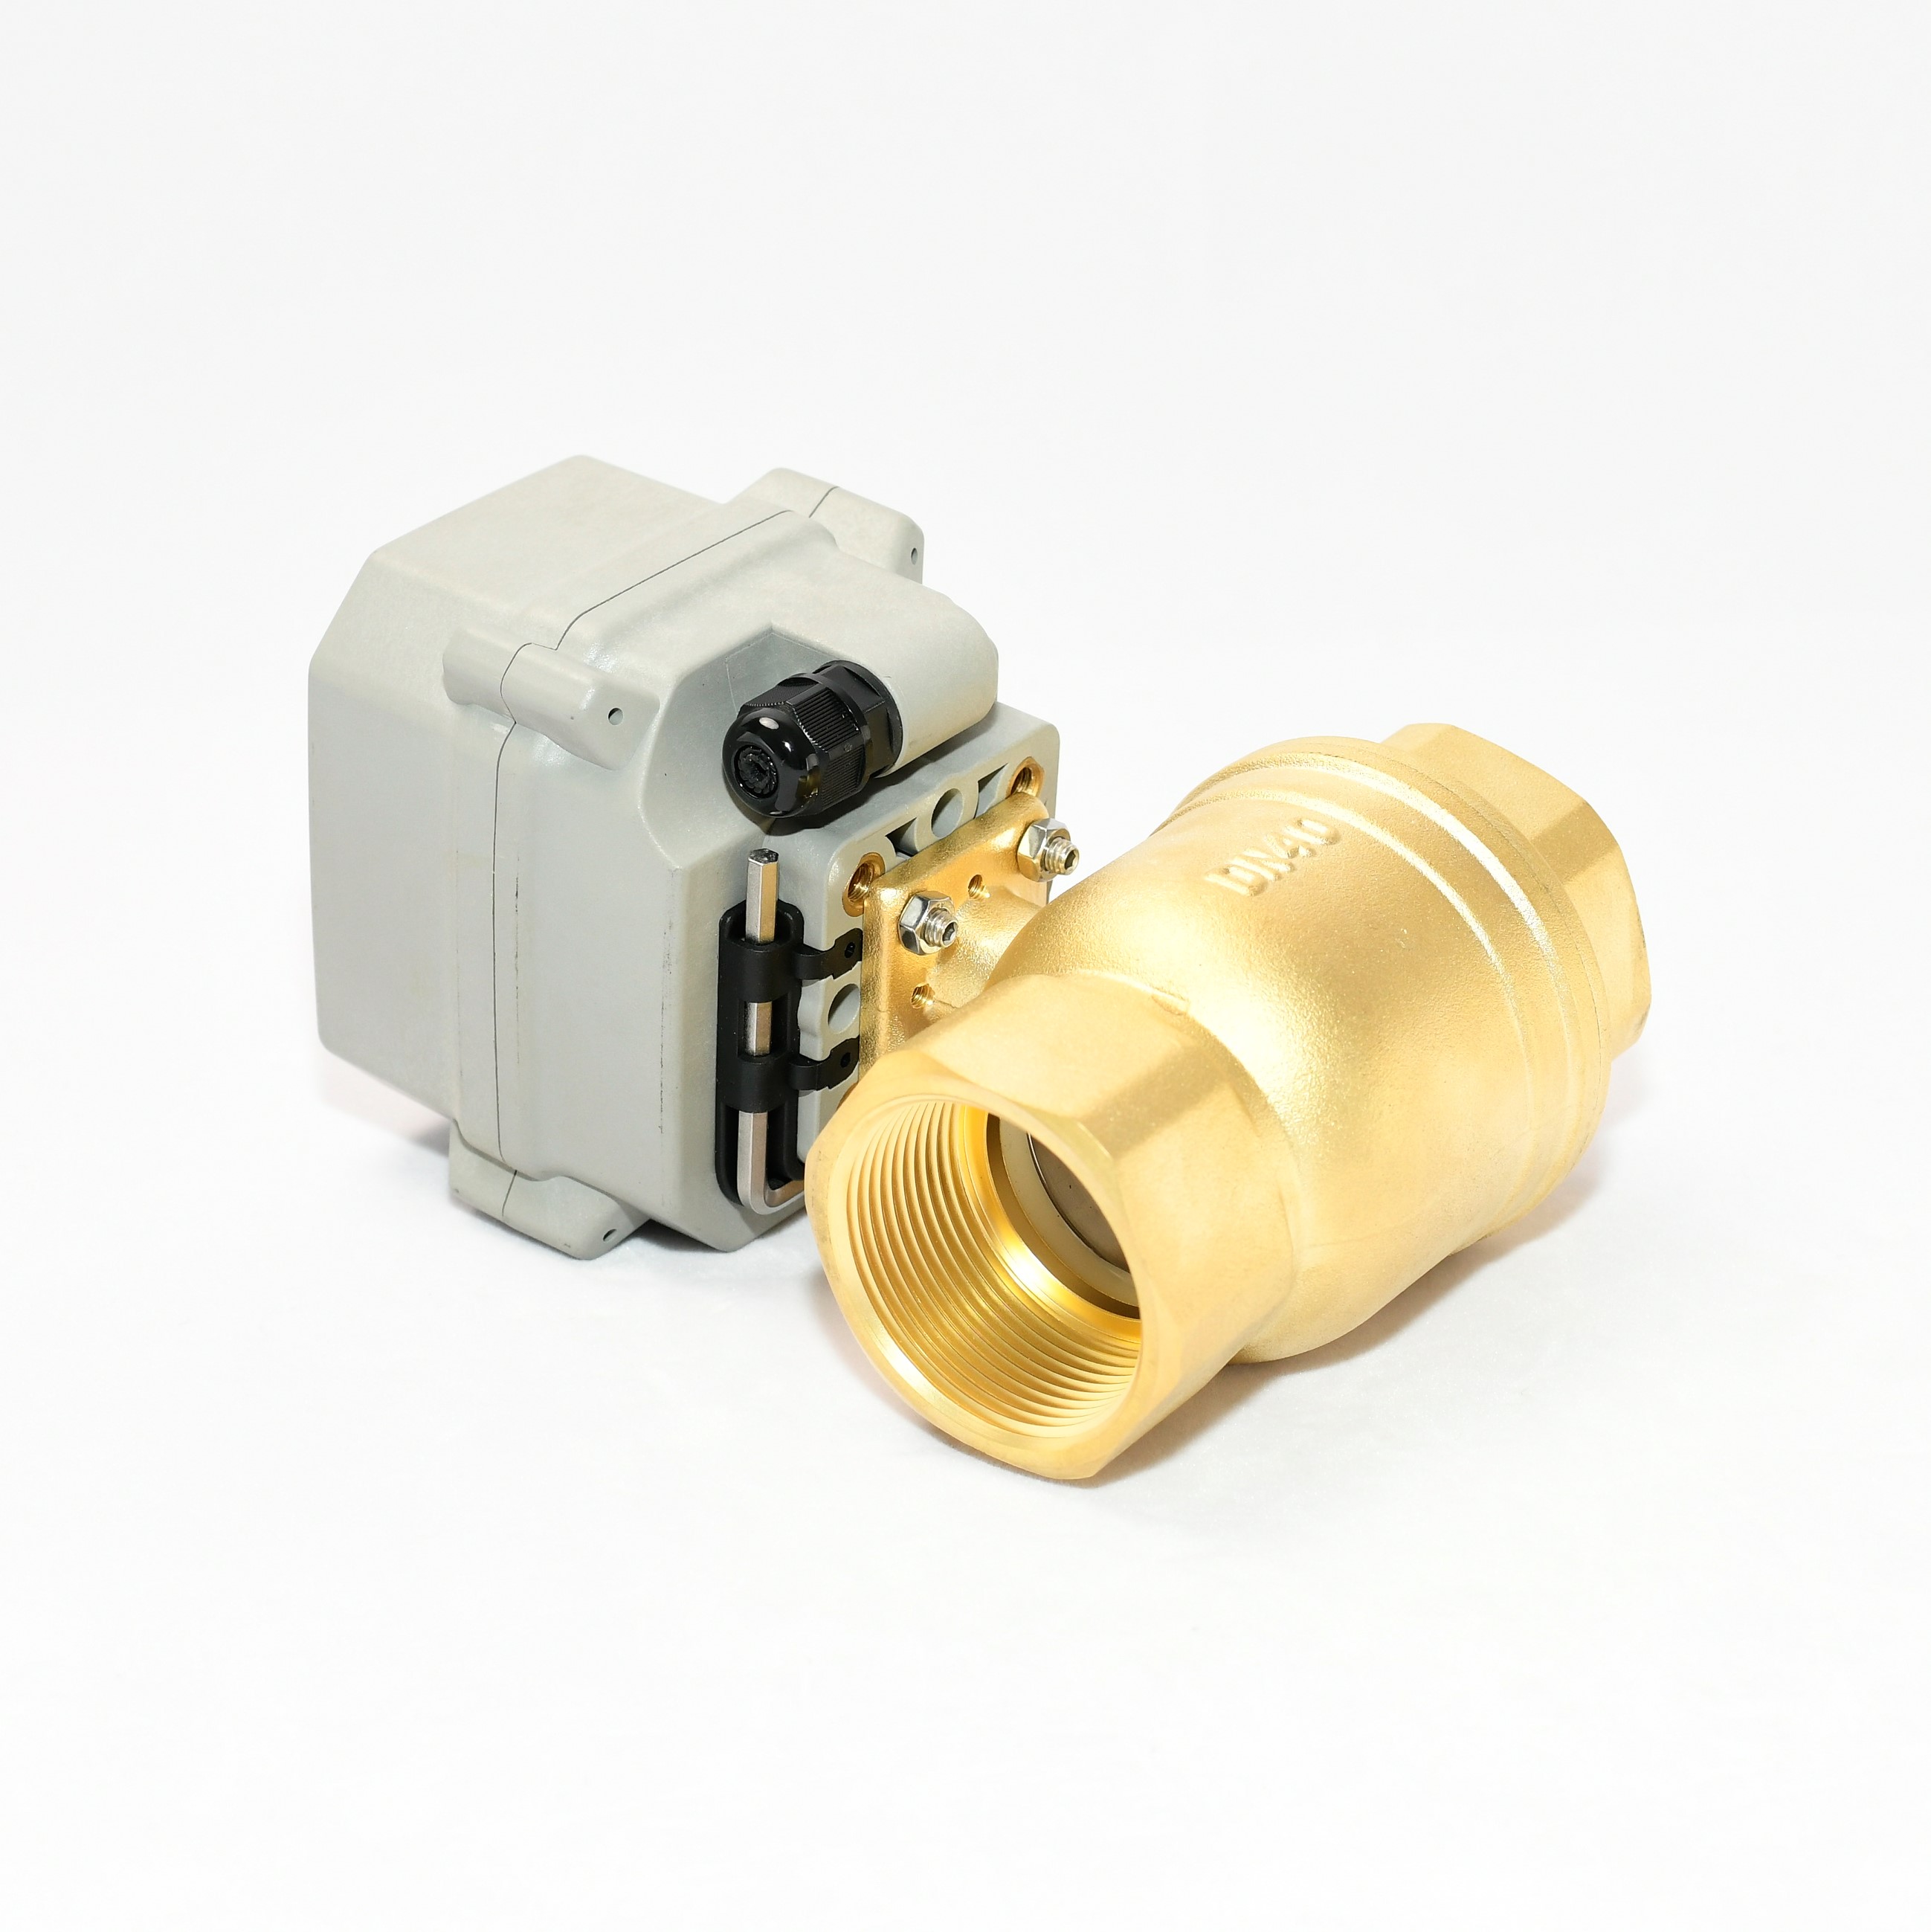 DN40 brass12v motorized ball valve electric brass water meter ball valve